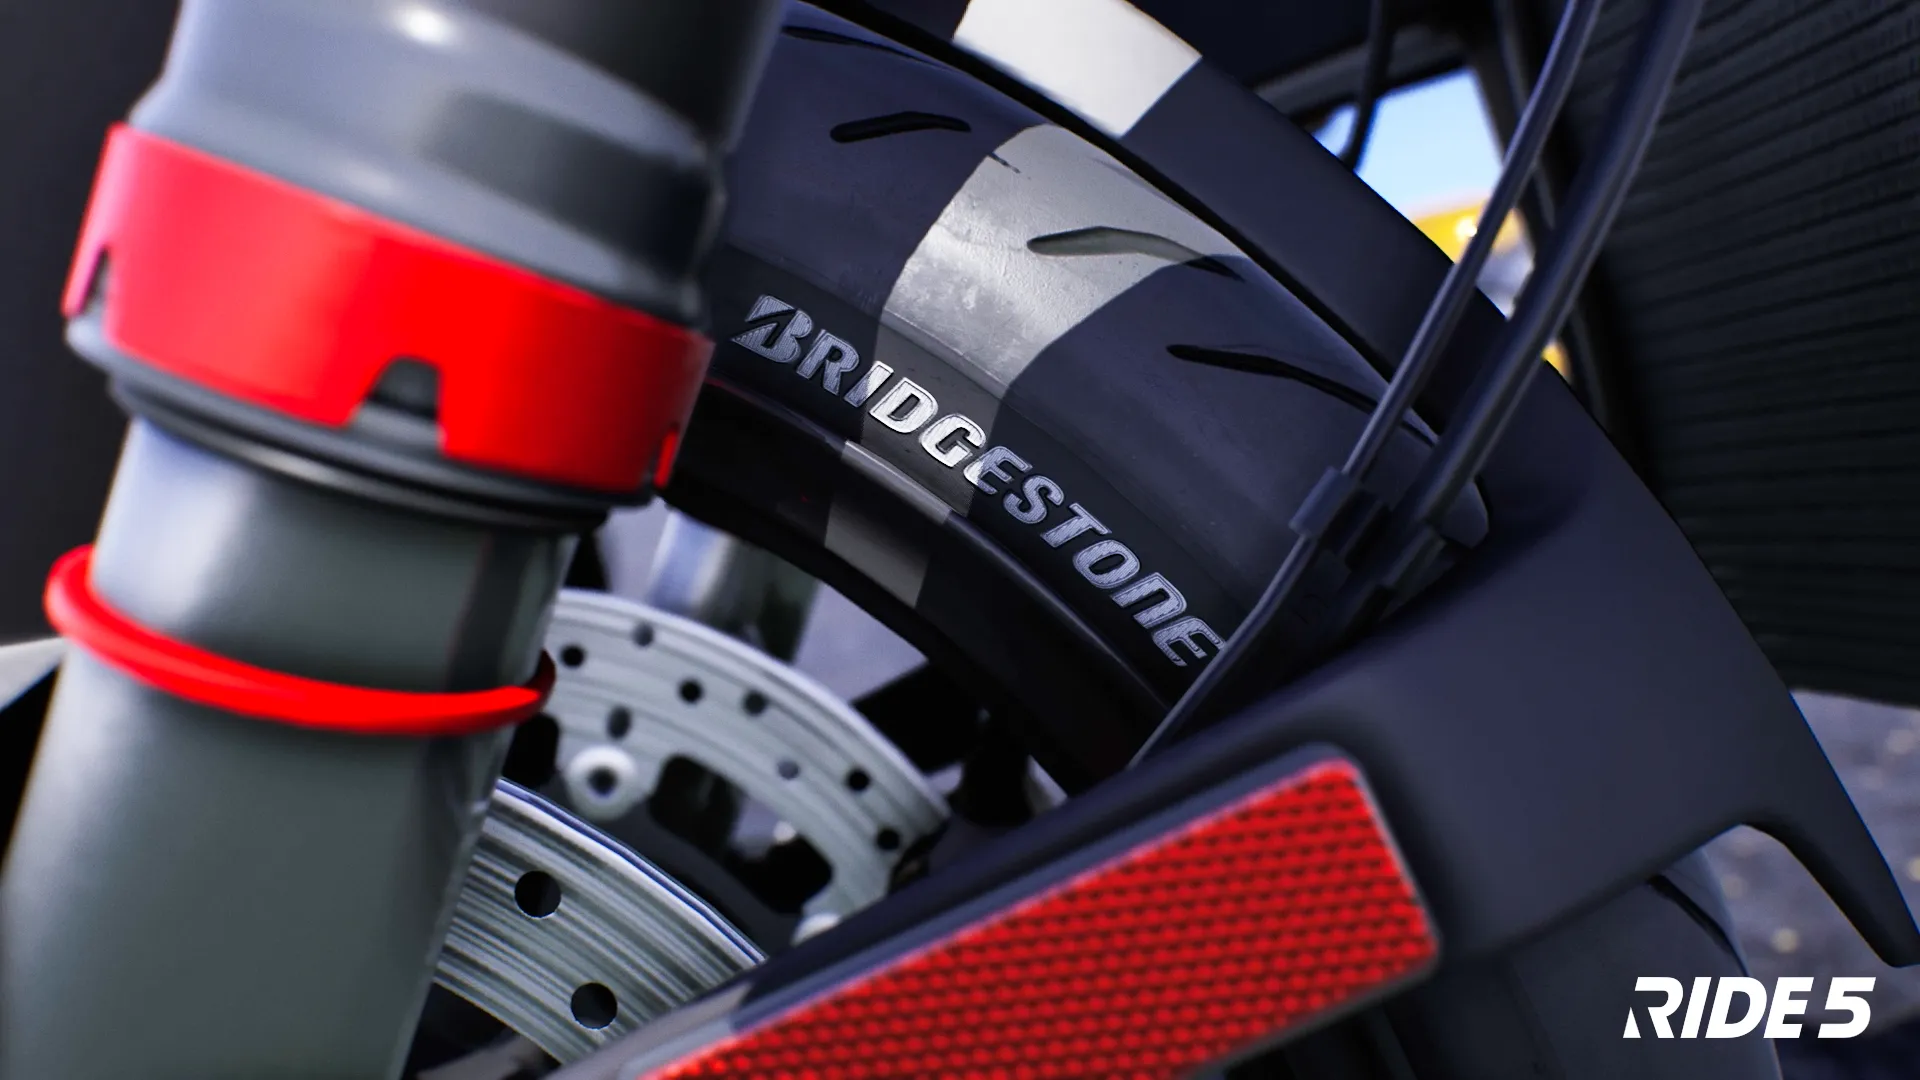 Close-up of Bridgestone tyre in the RIDE 5 game